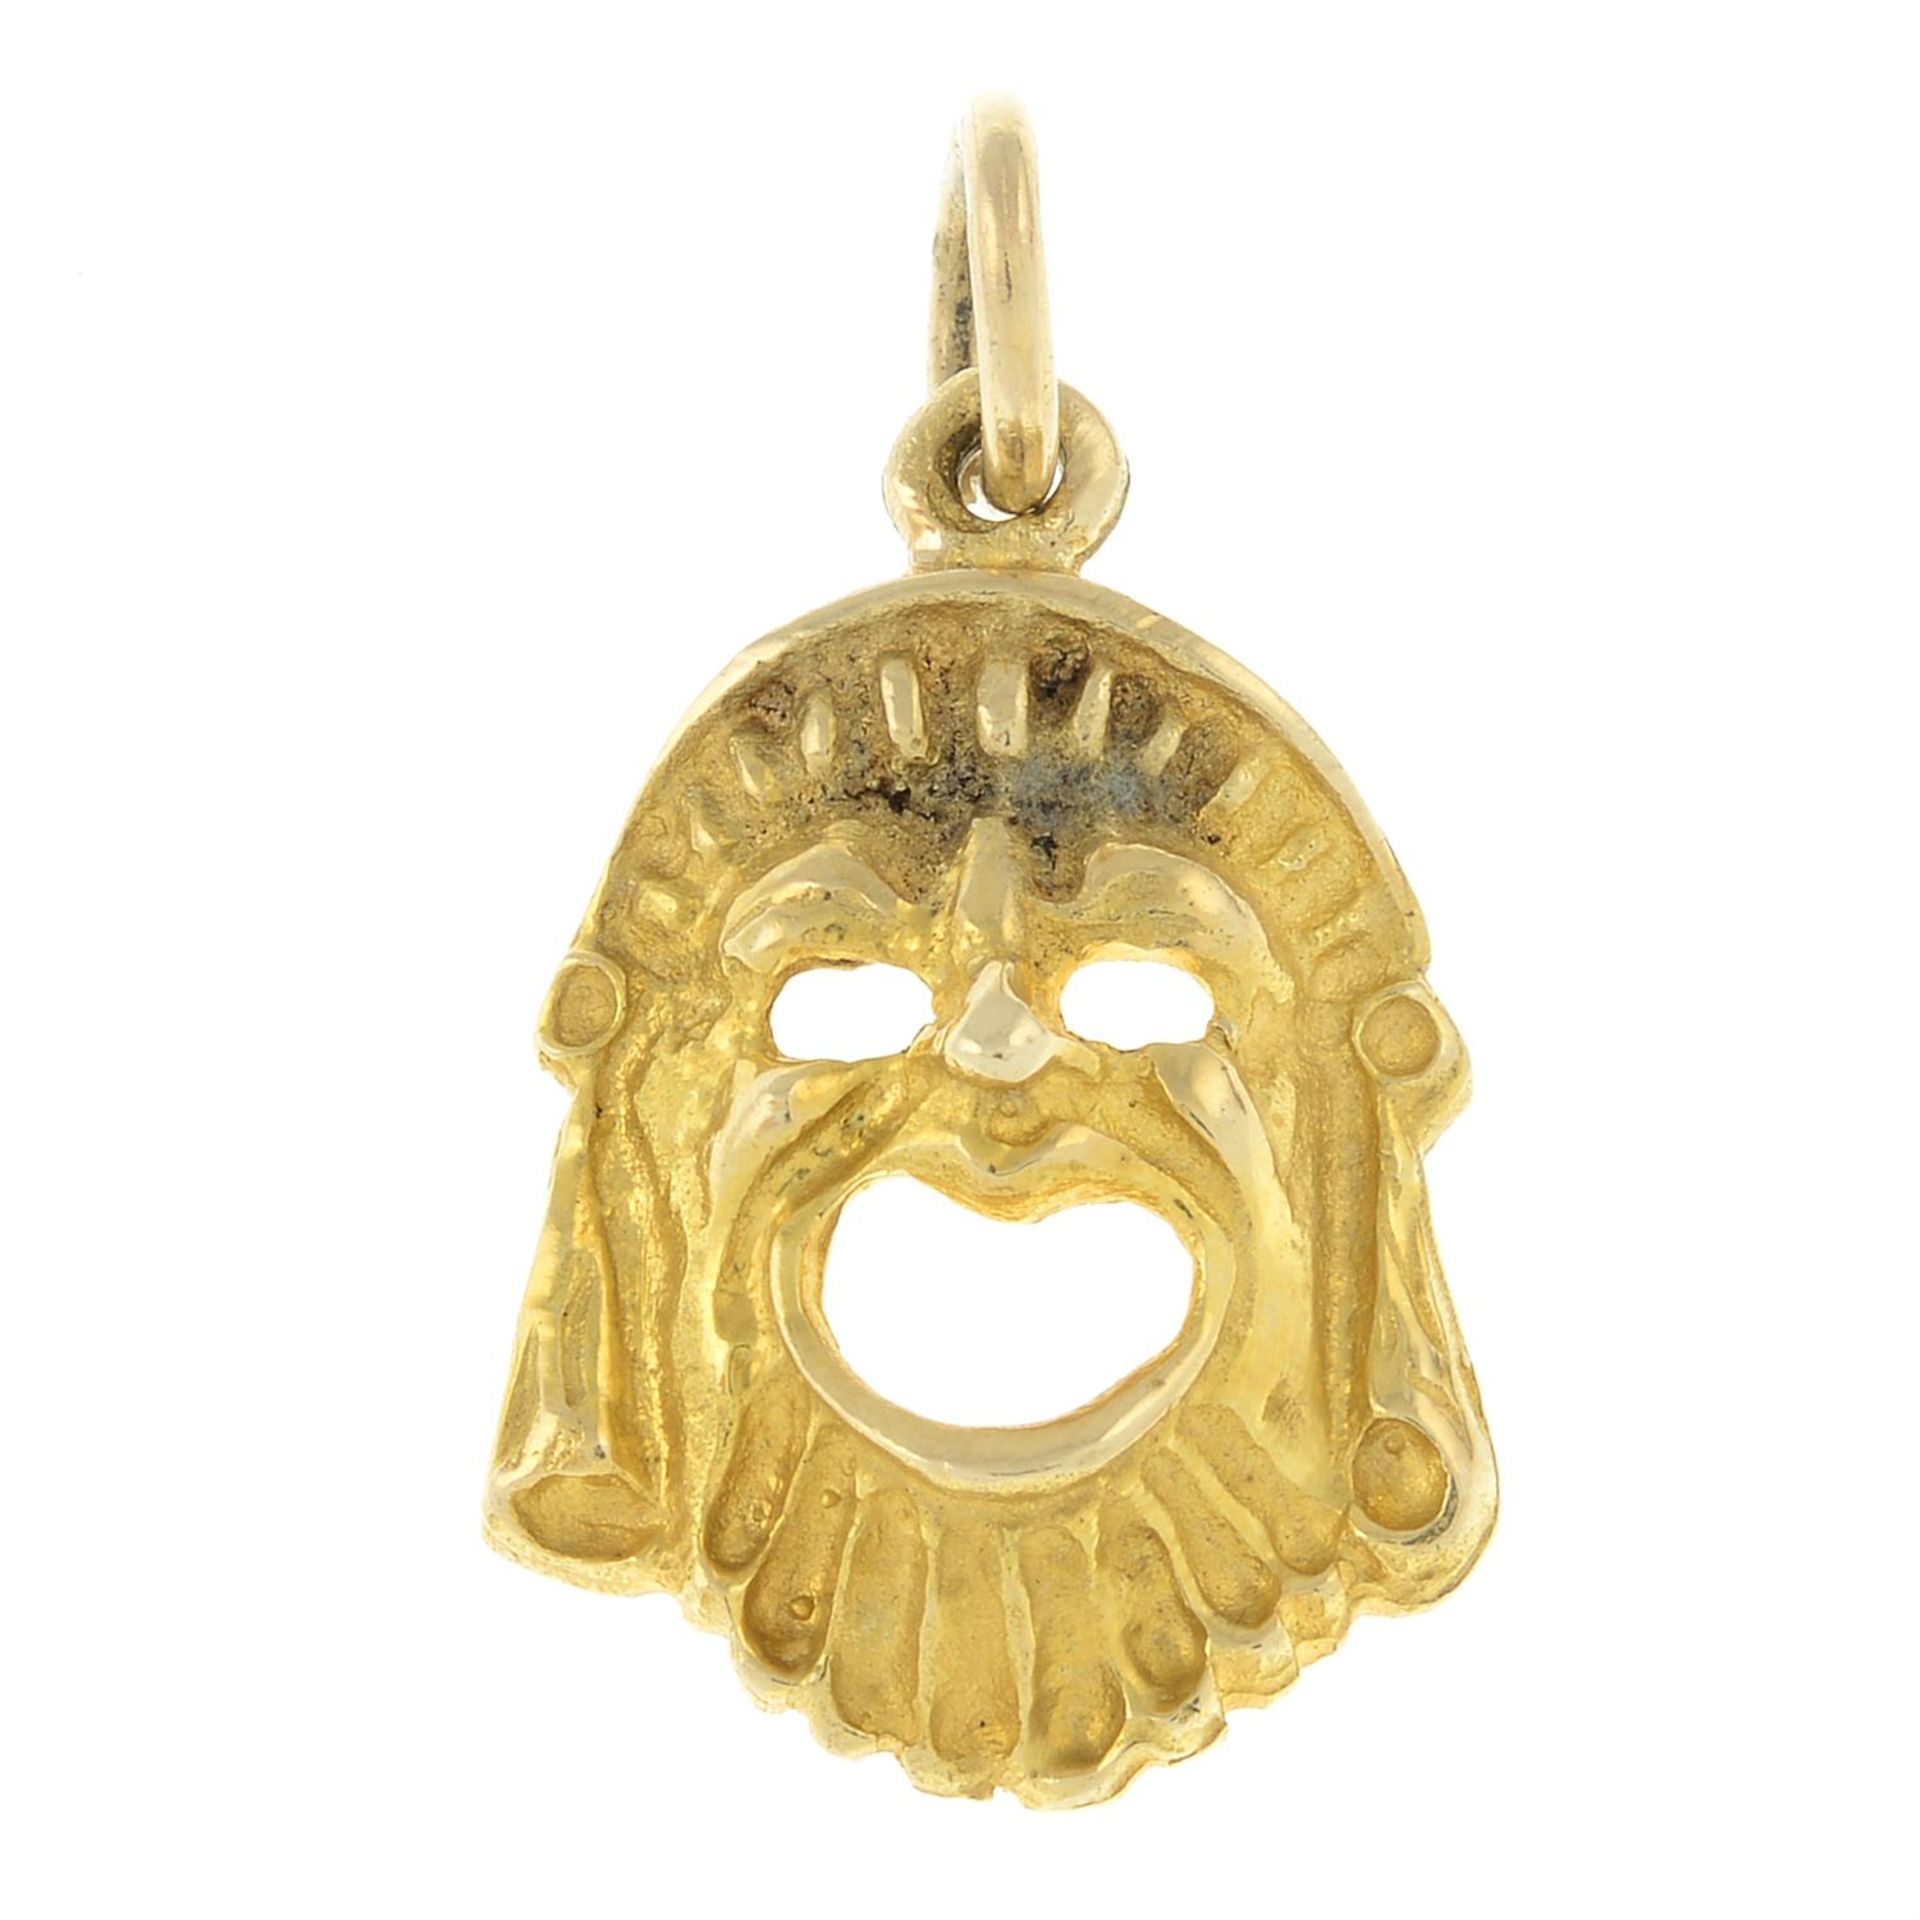 A Greek tragedy 'Melpomene' mask pendant.